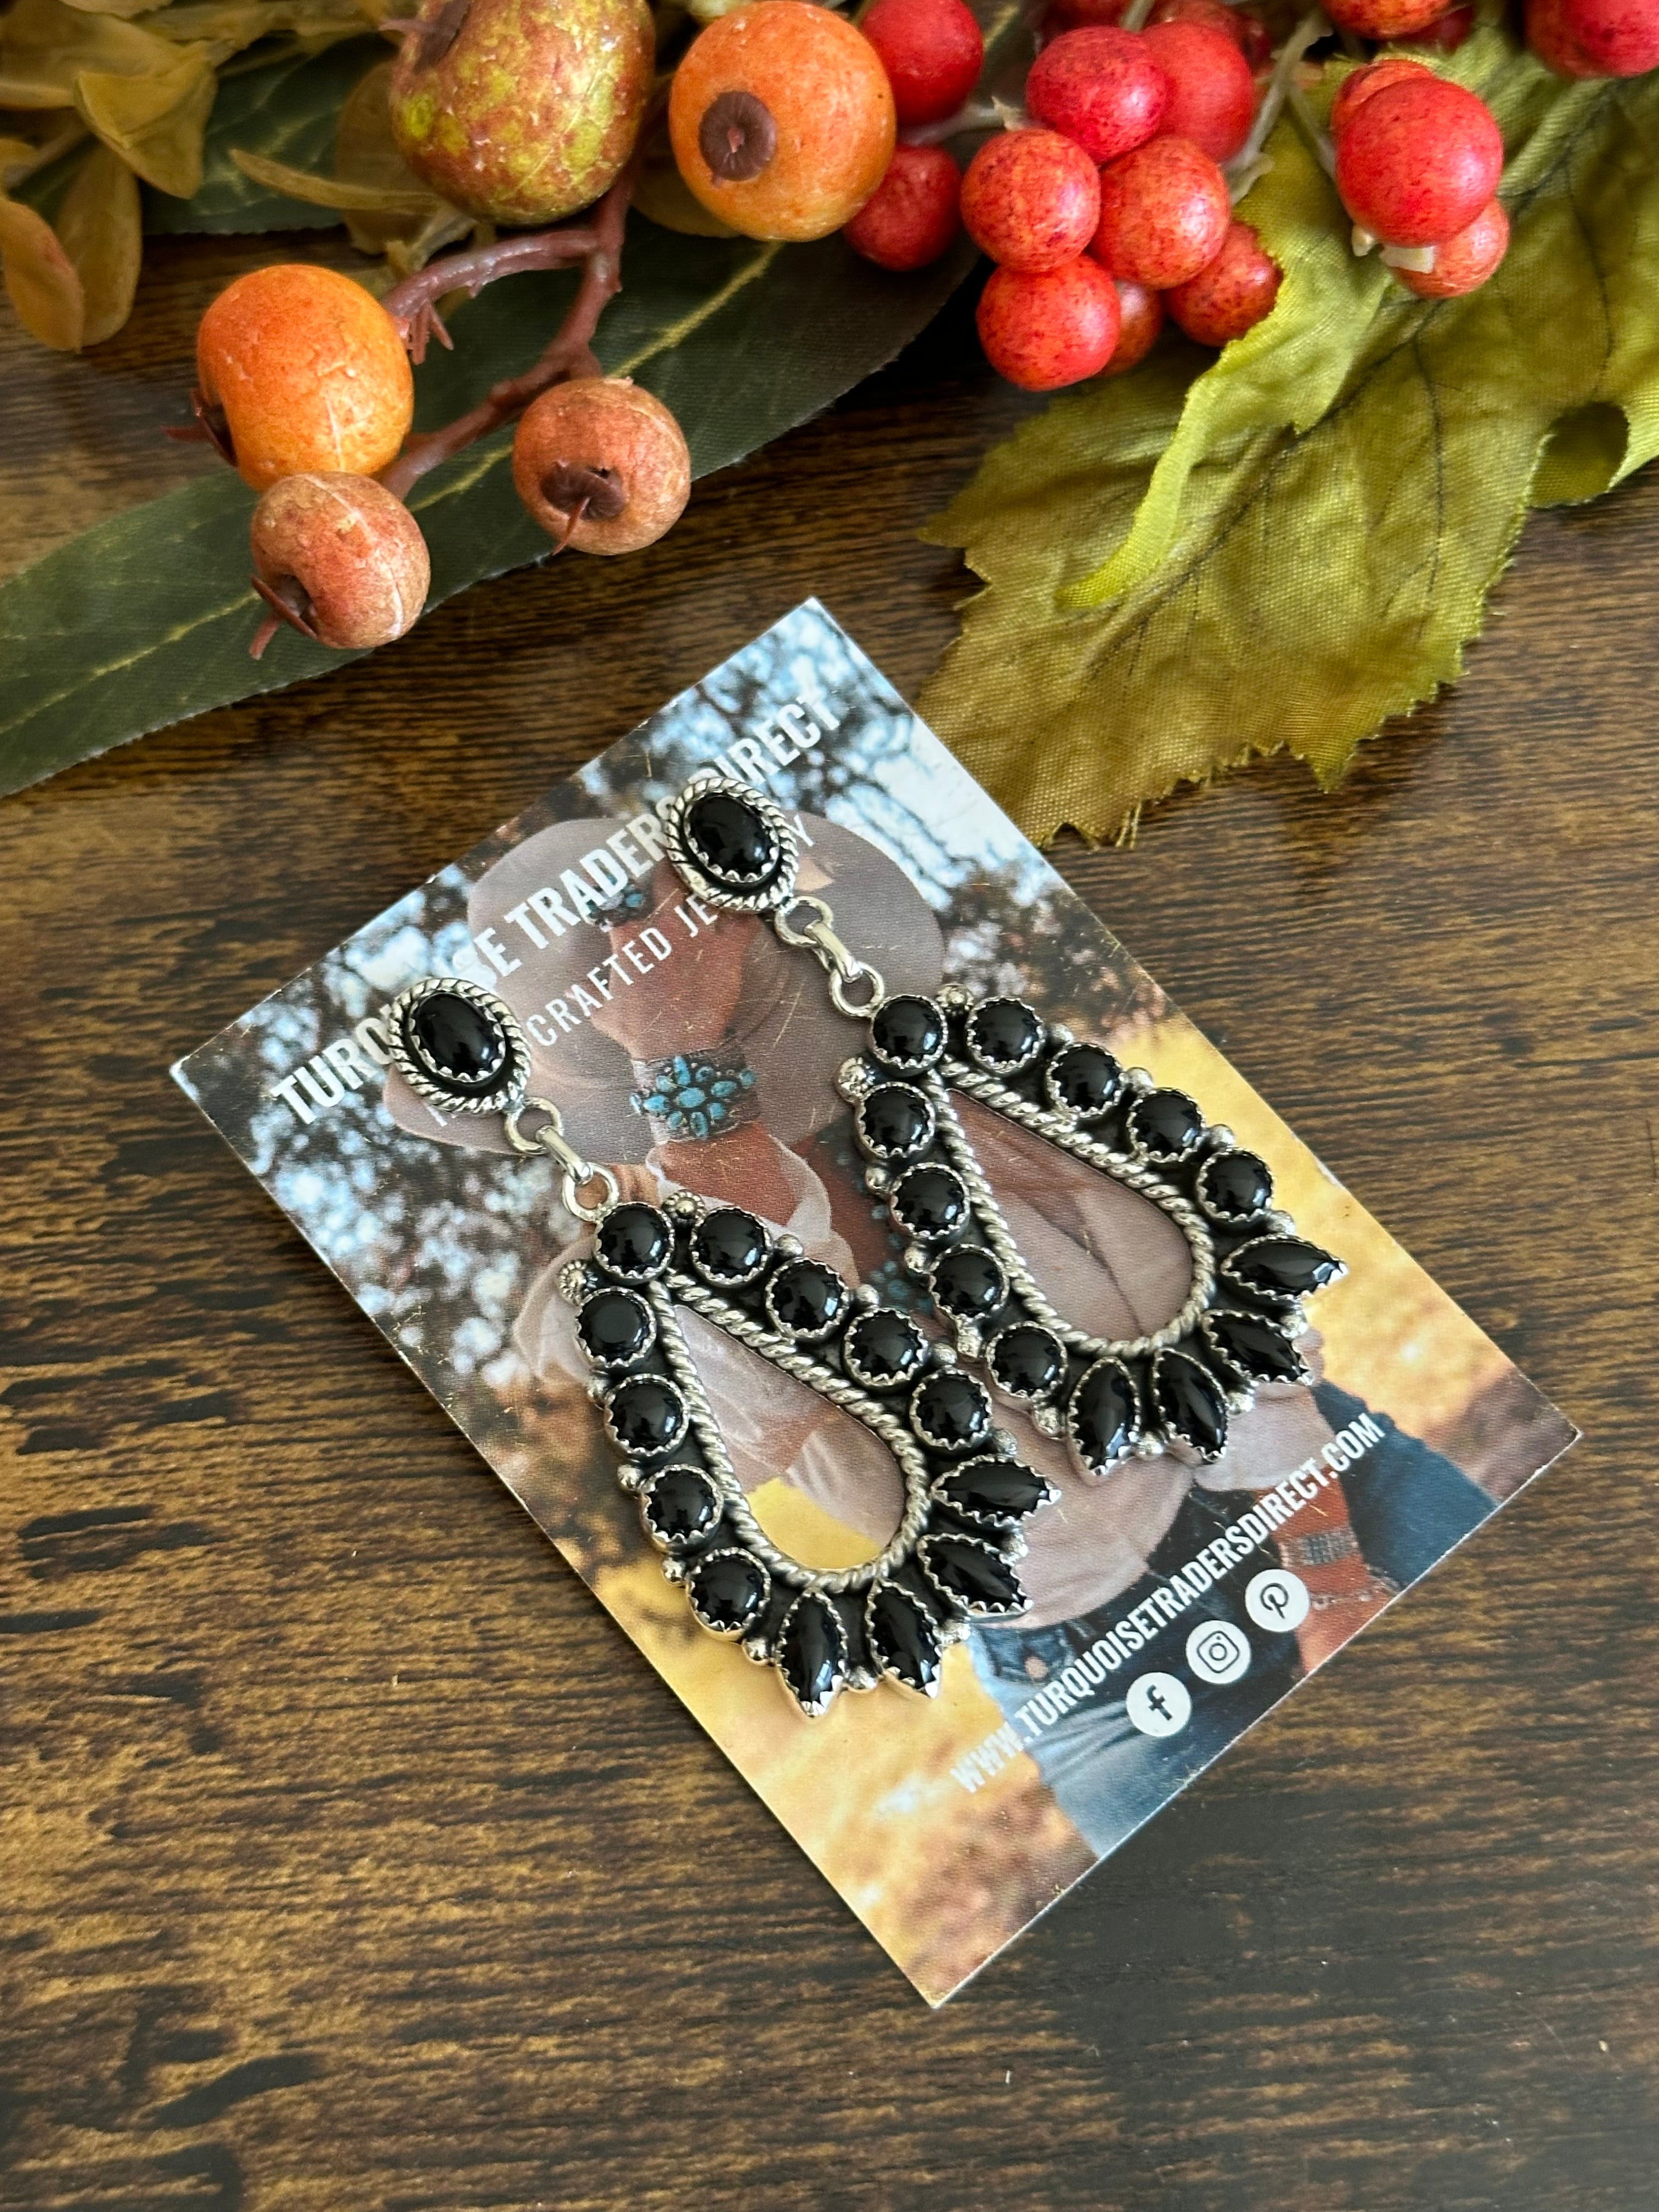 Southwest Handmade Onyx & Sterling Silver Post Dangle Cluster Earrings